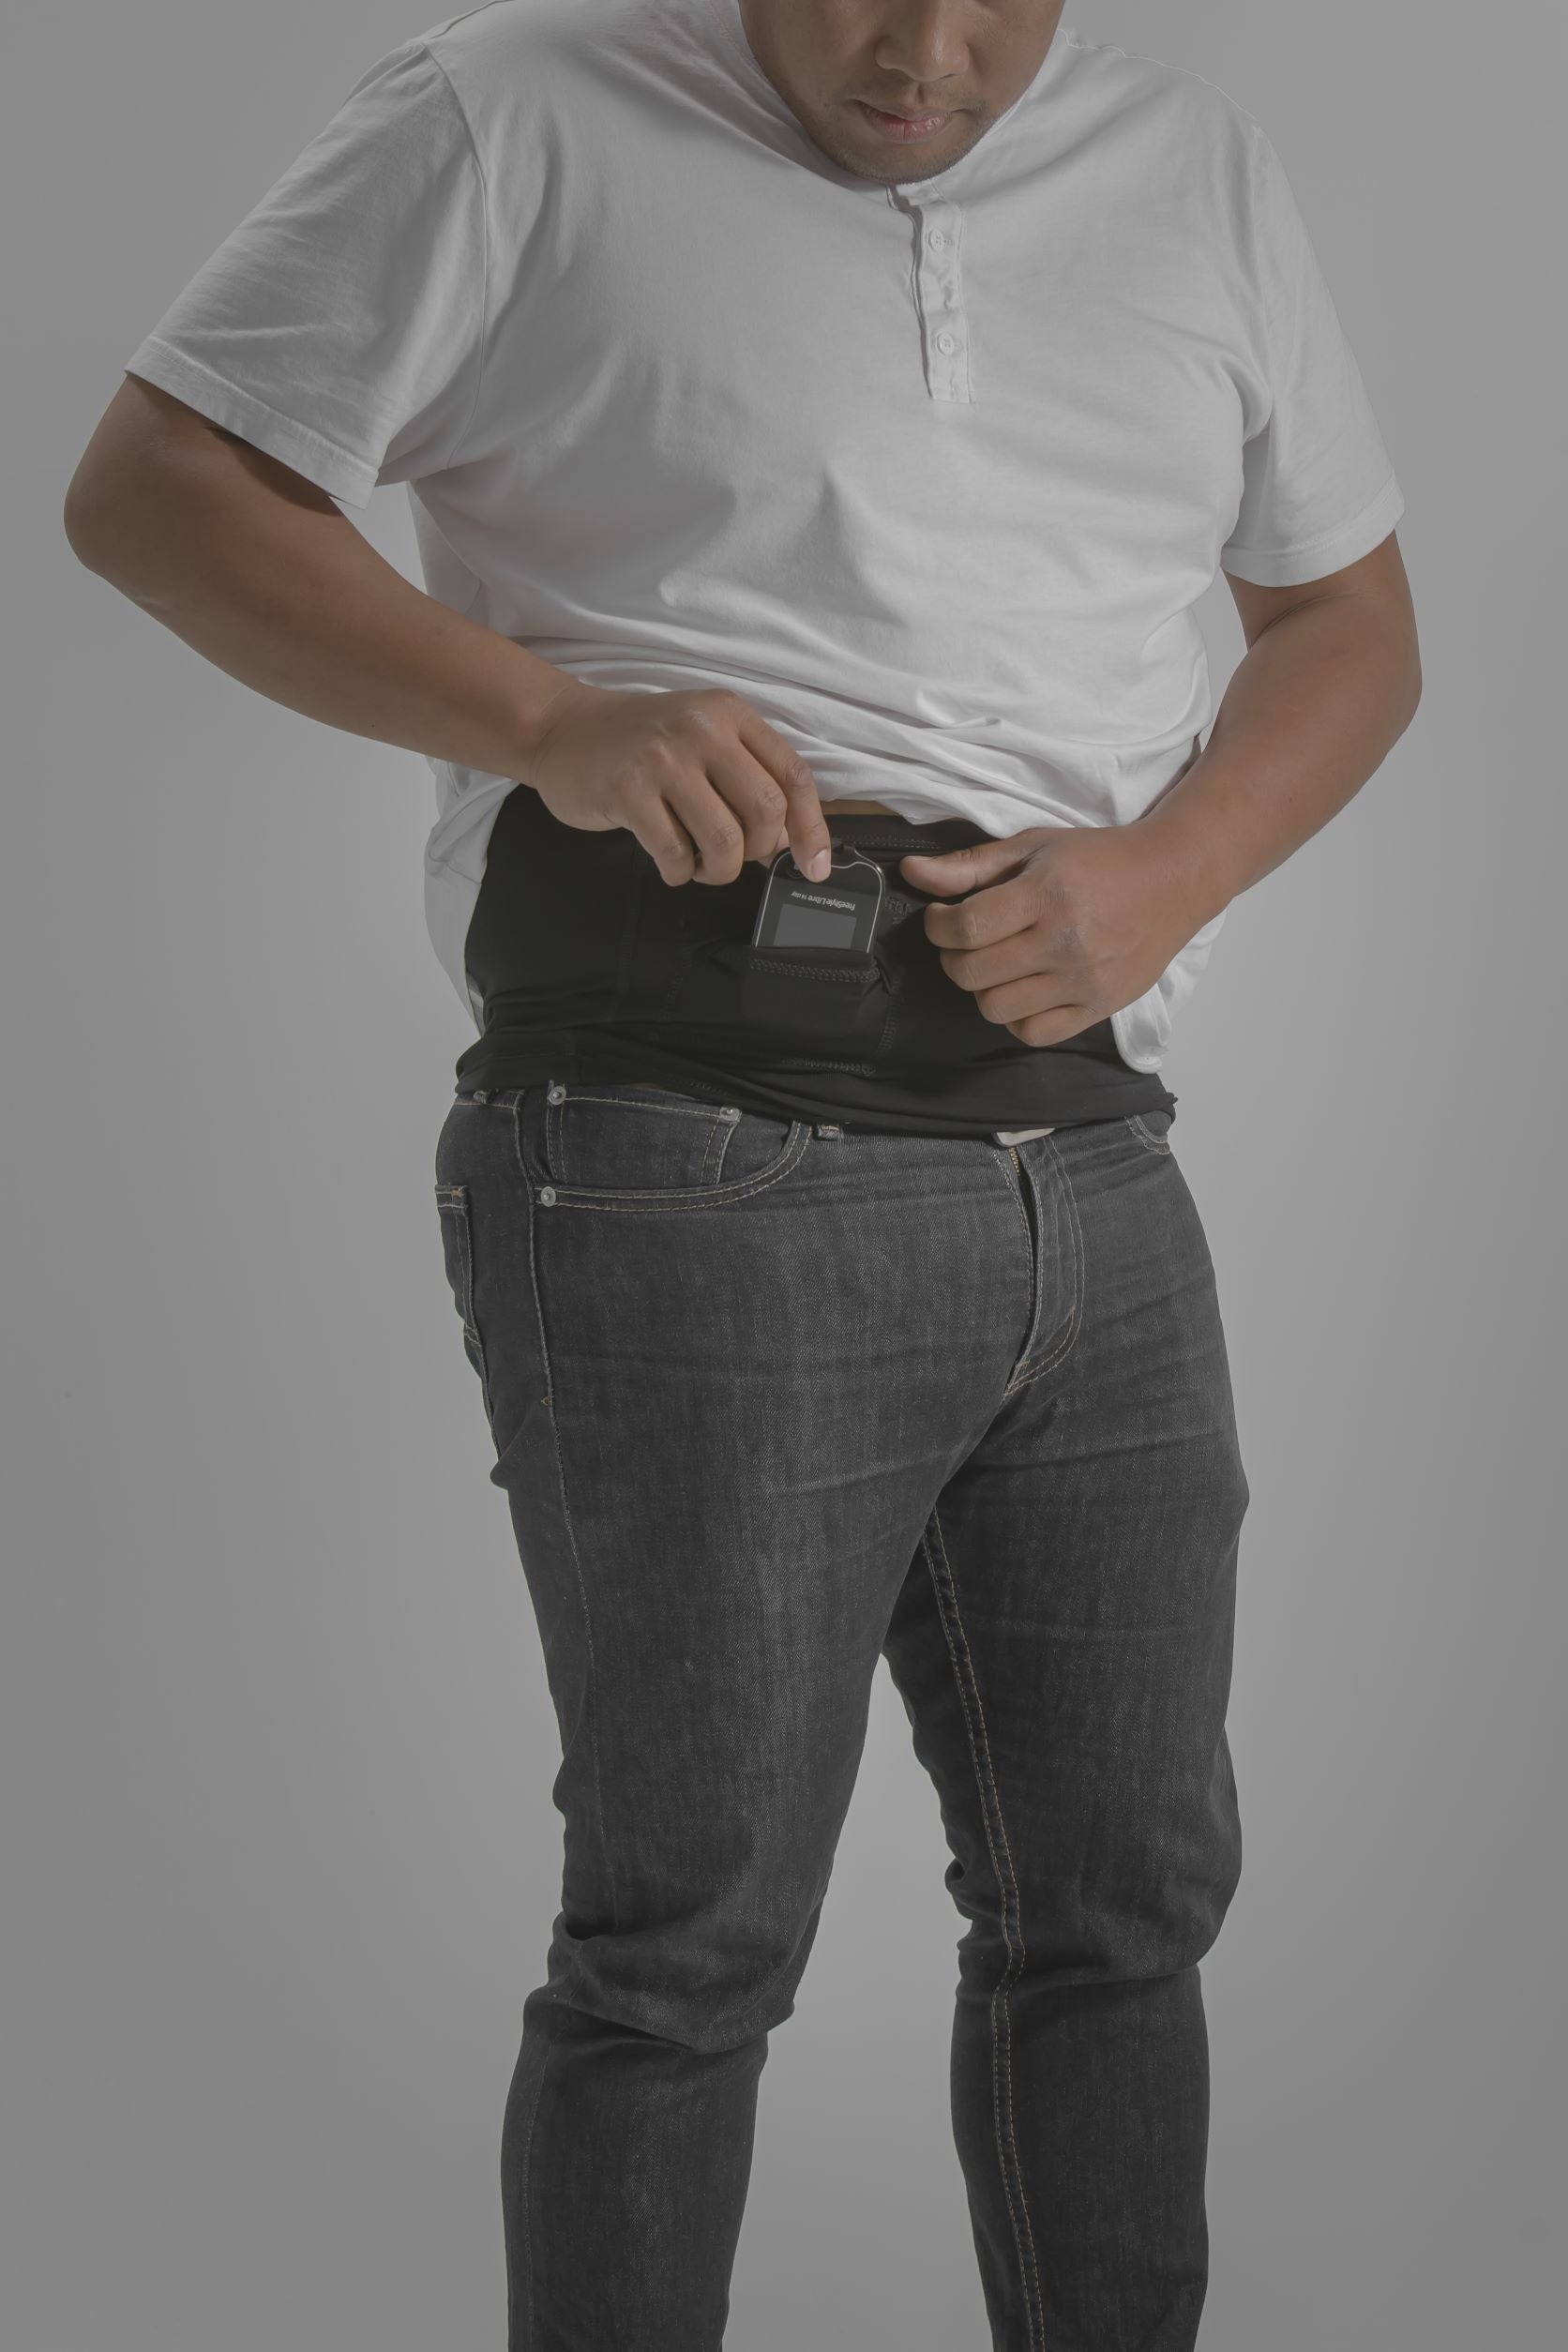 Women's Activewear Boyshort Underwear with Insulin Pump Pockets -  ShopperBoard